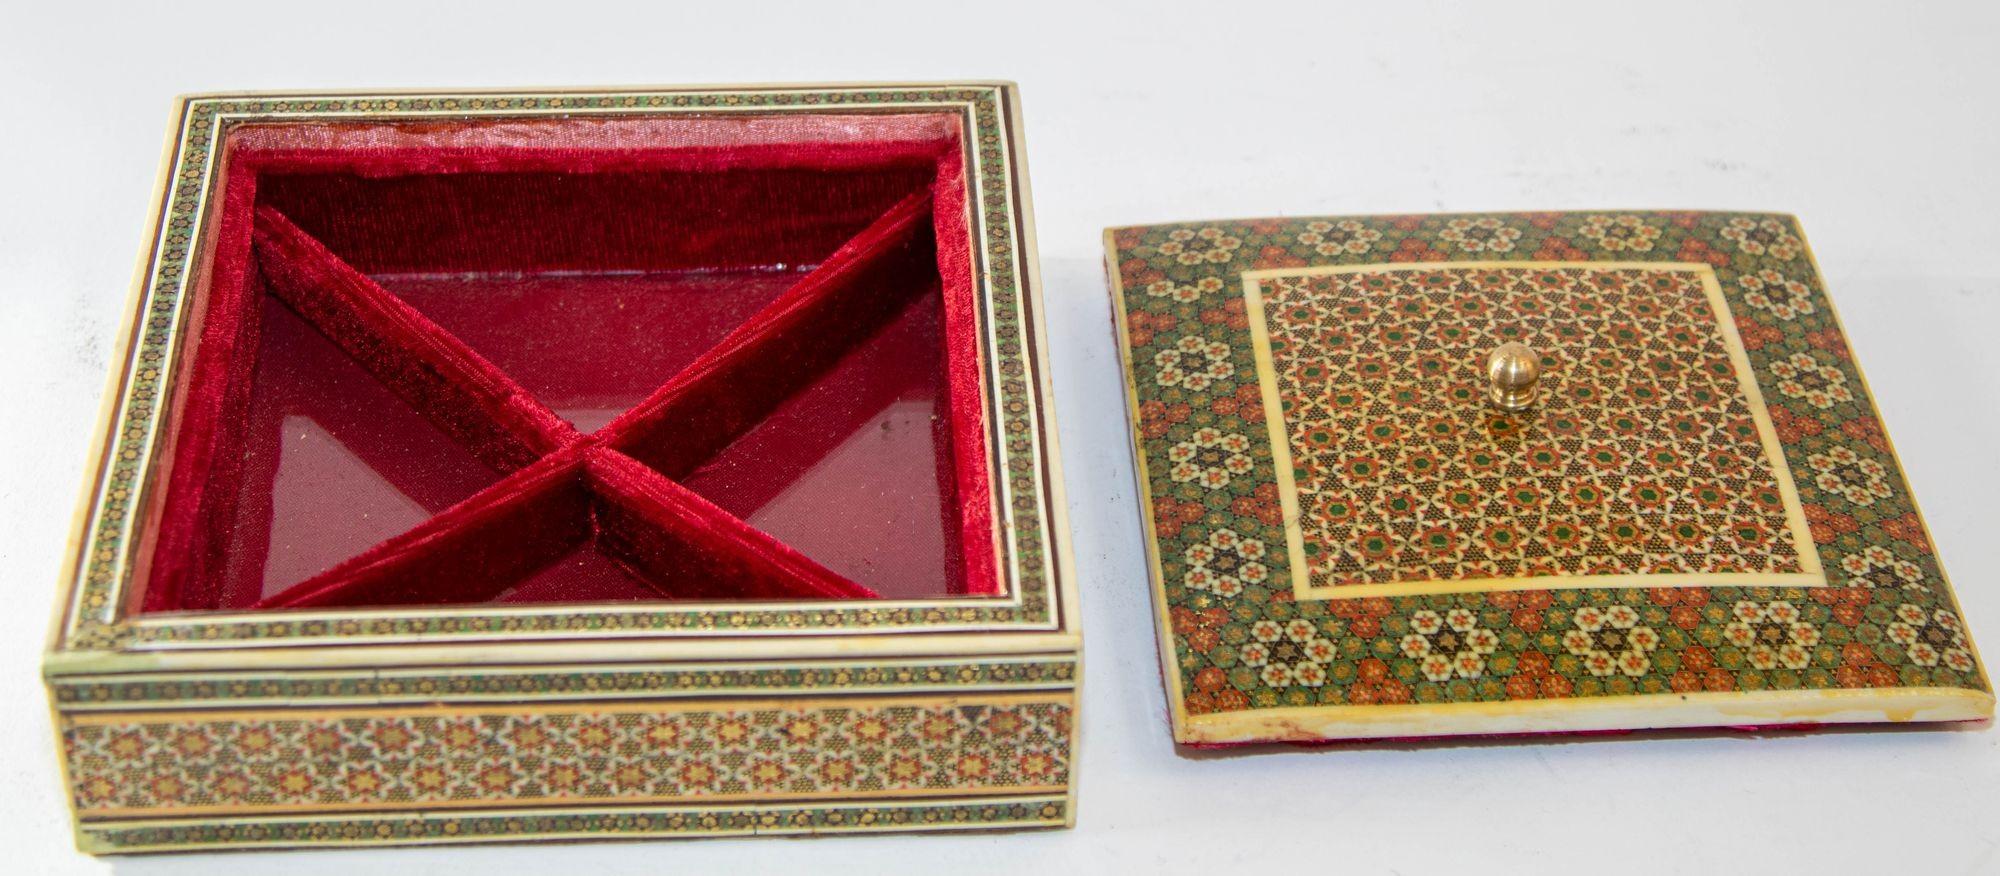 1950s Anglo Indian Micro Sadeli Mosaic Inlaid Jewelry Box For Sale 5